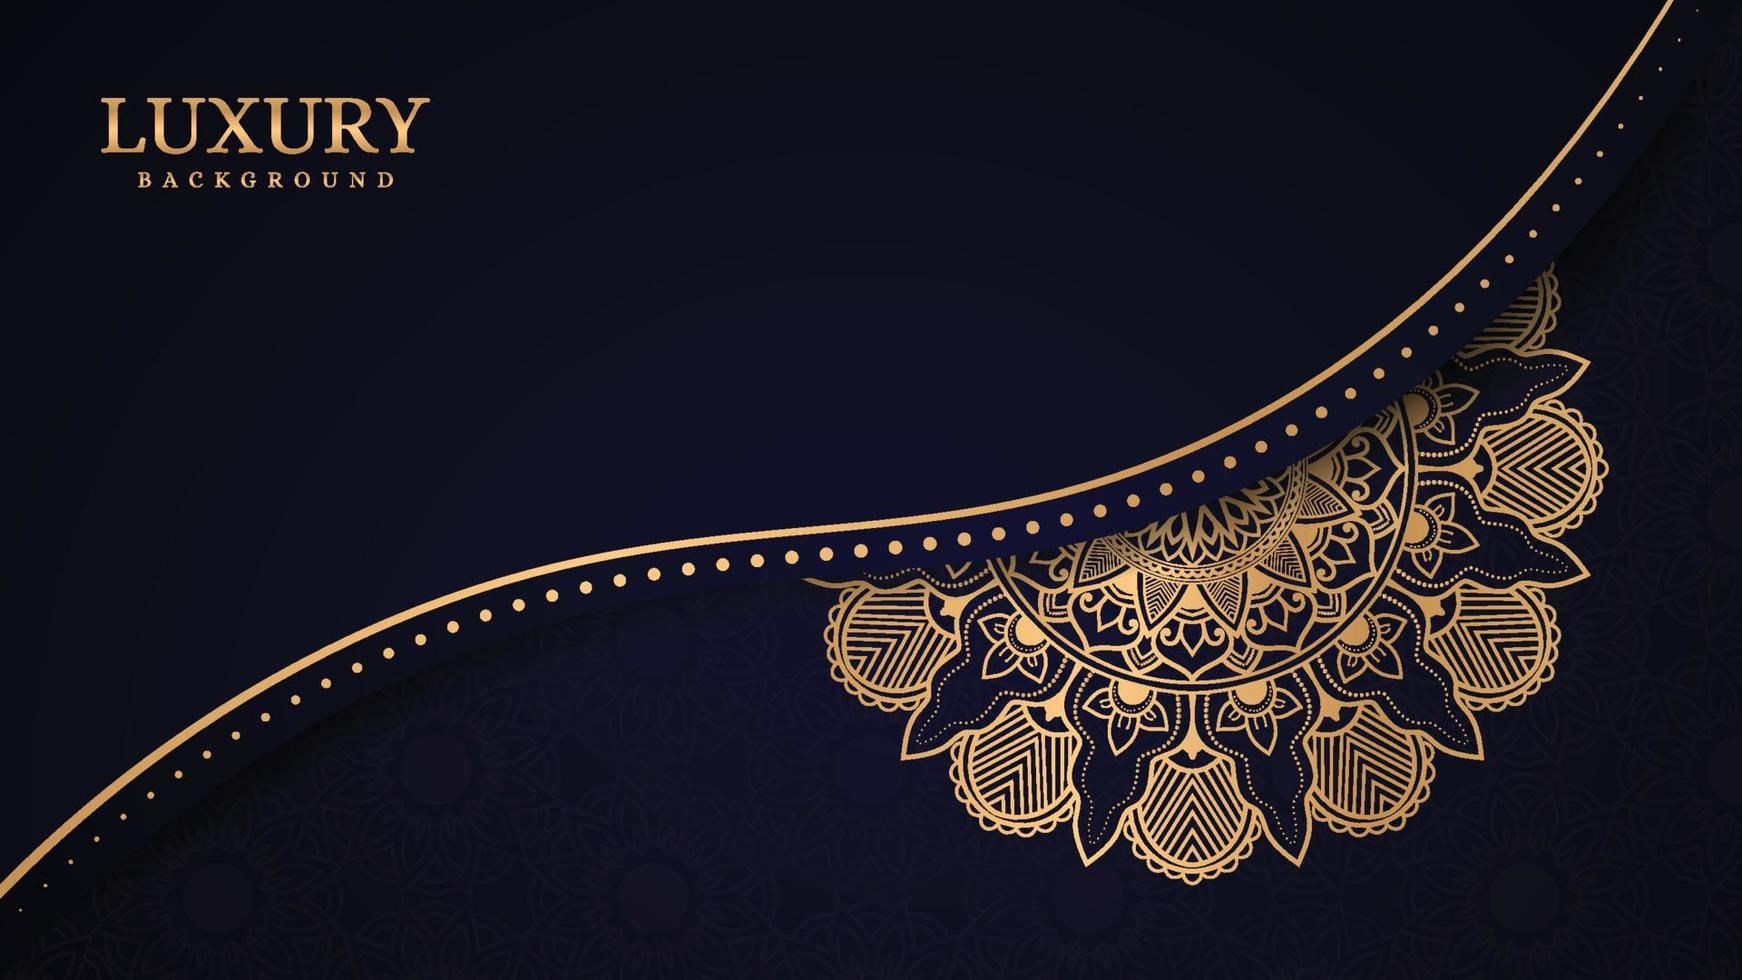 Golden luxury ornamental mandala background design with vintage wedding invitation card pattern vector